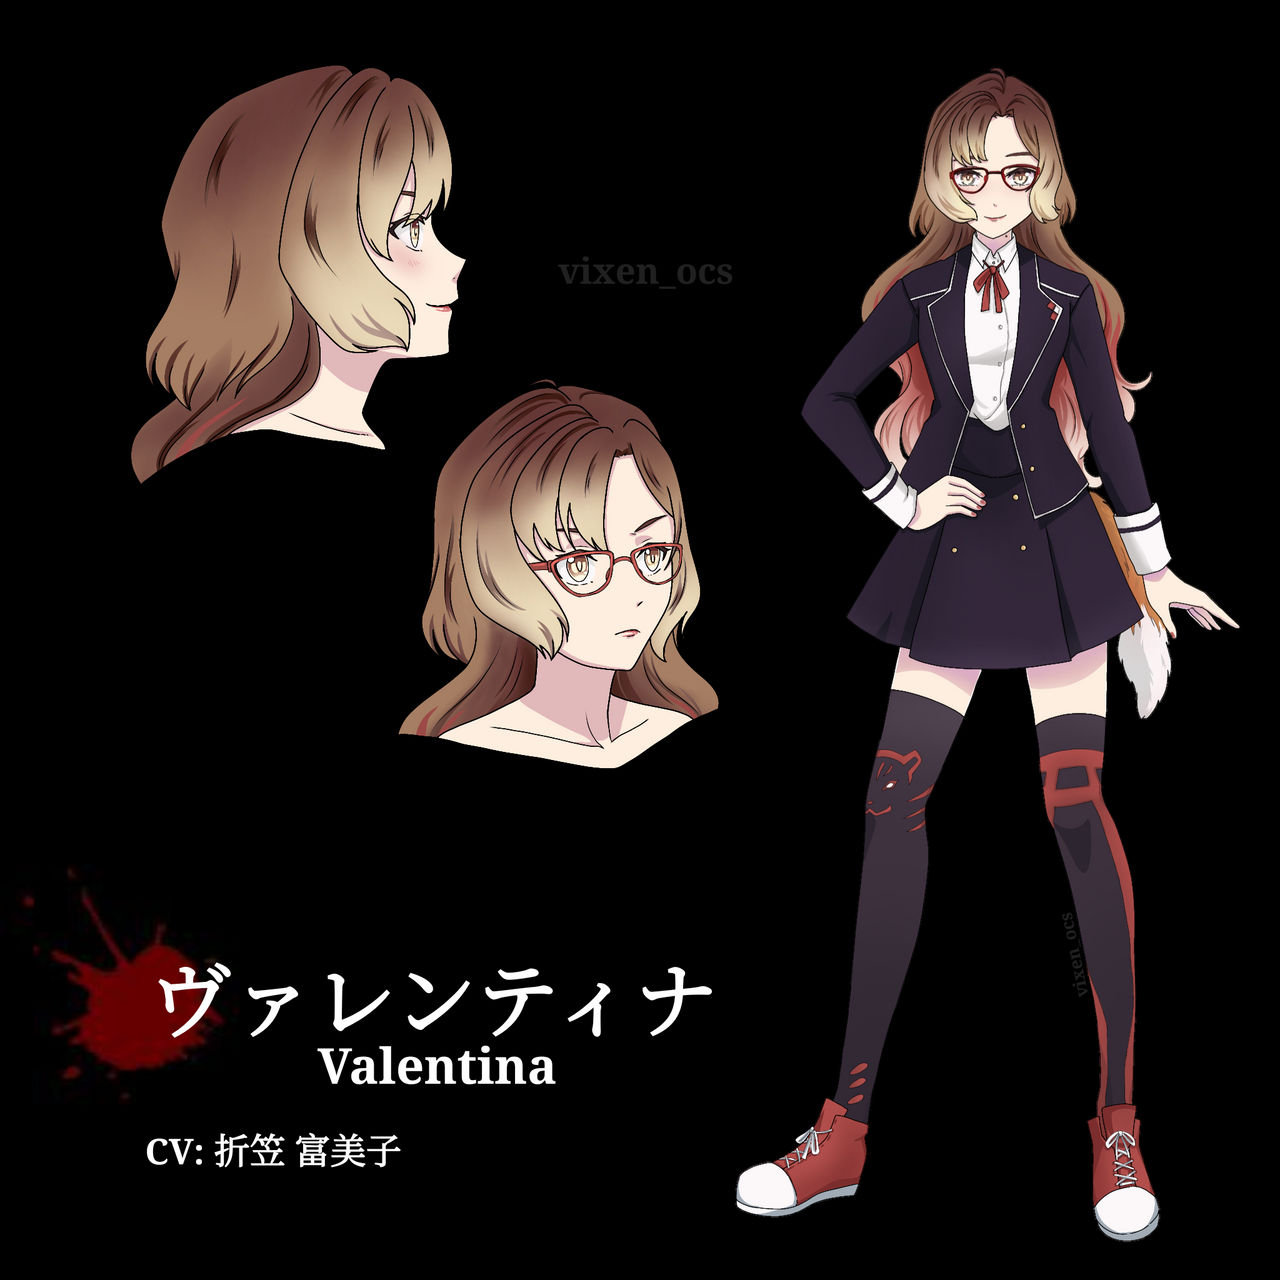 Another anime characters by loverofsasukeuchiha on DeviantArt